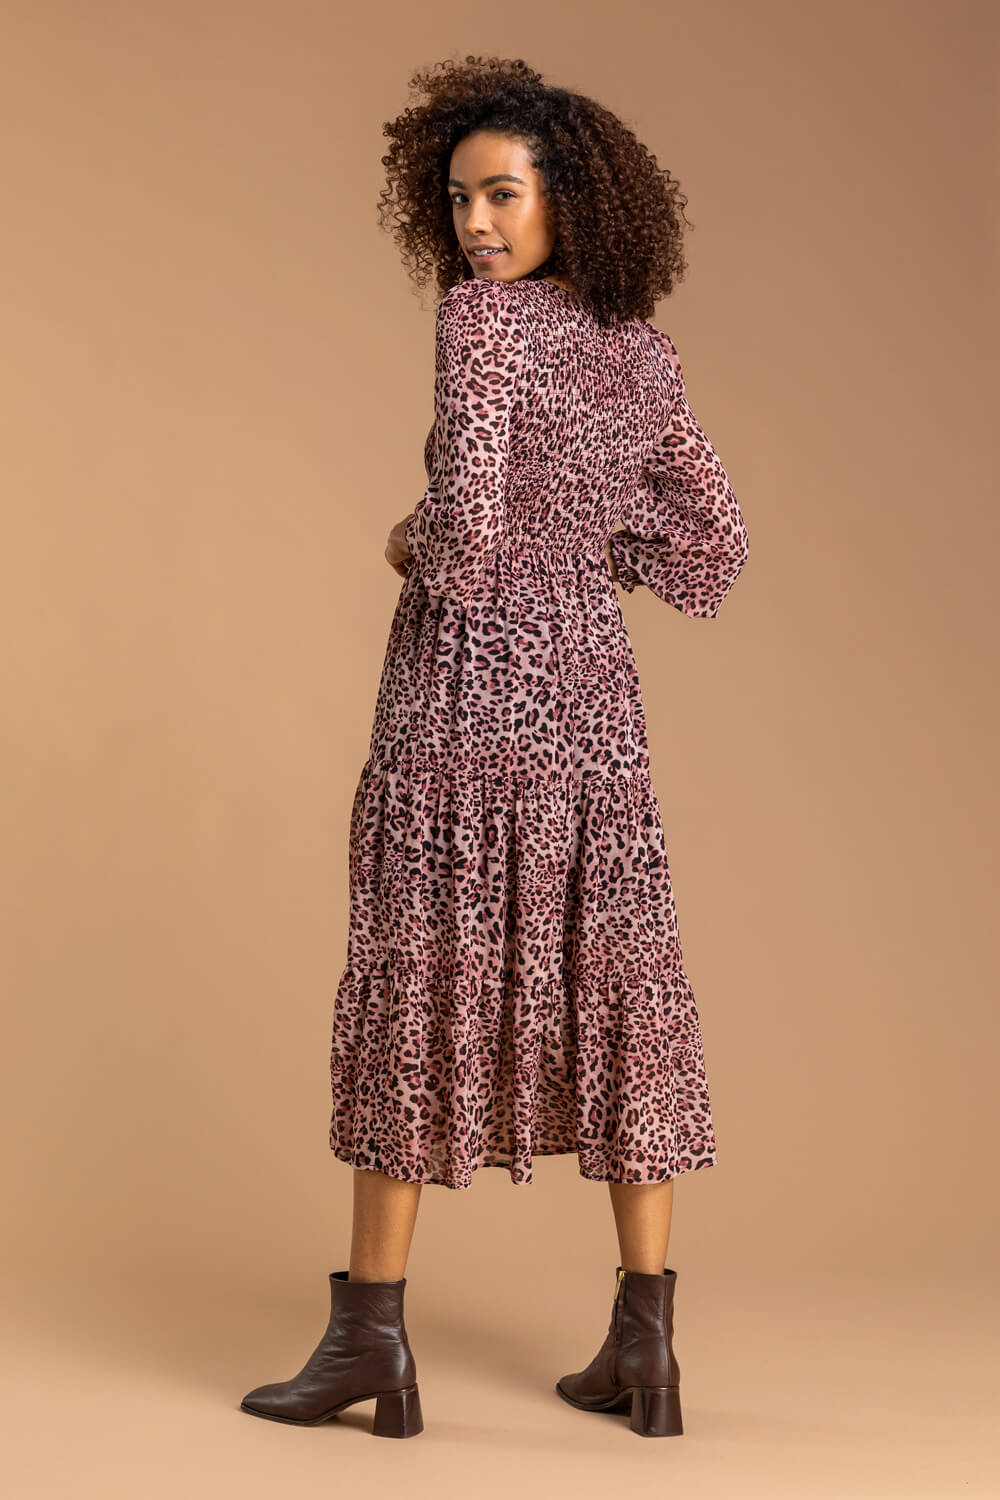 PINK Leopard Print Shirred Tier Dress, Image 2 of 5